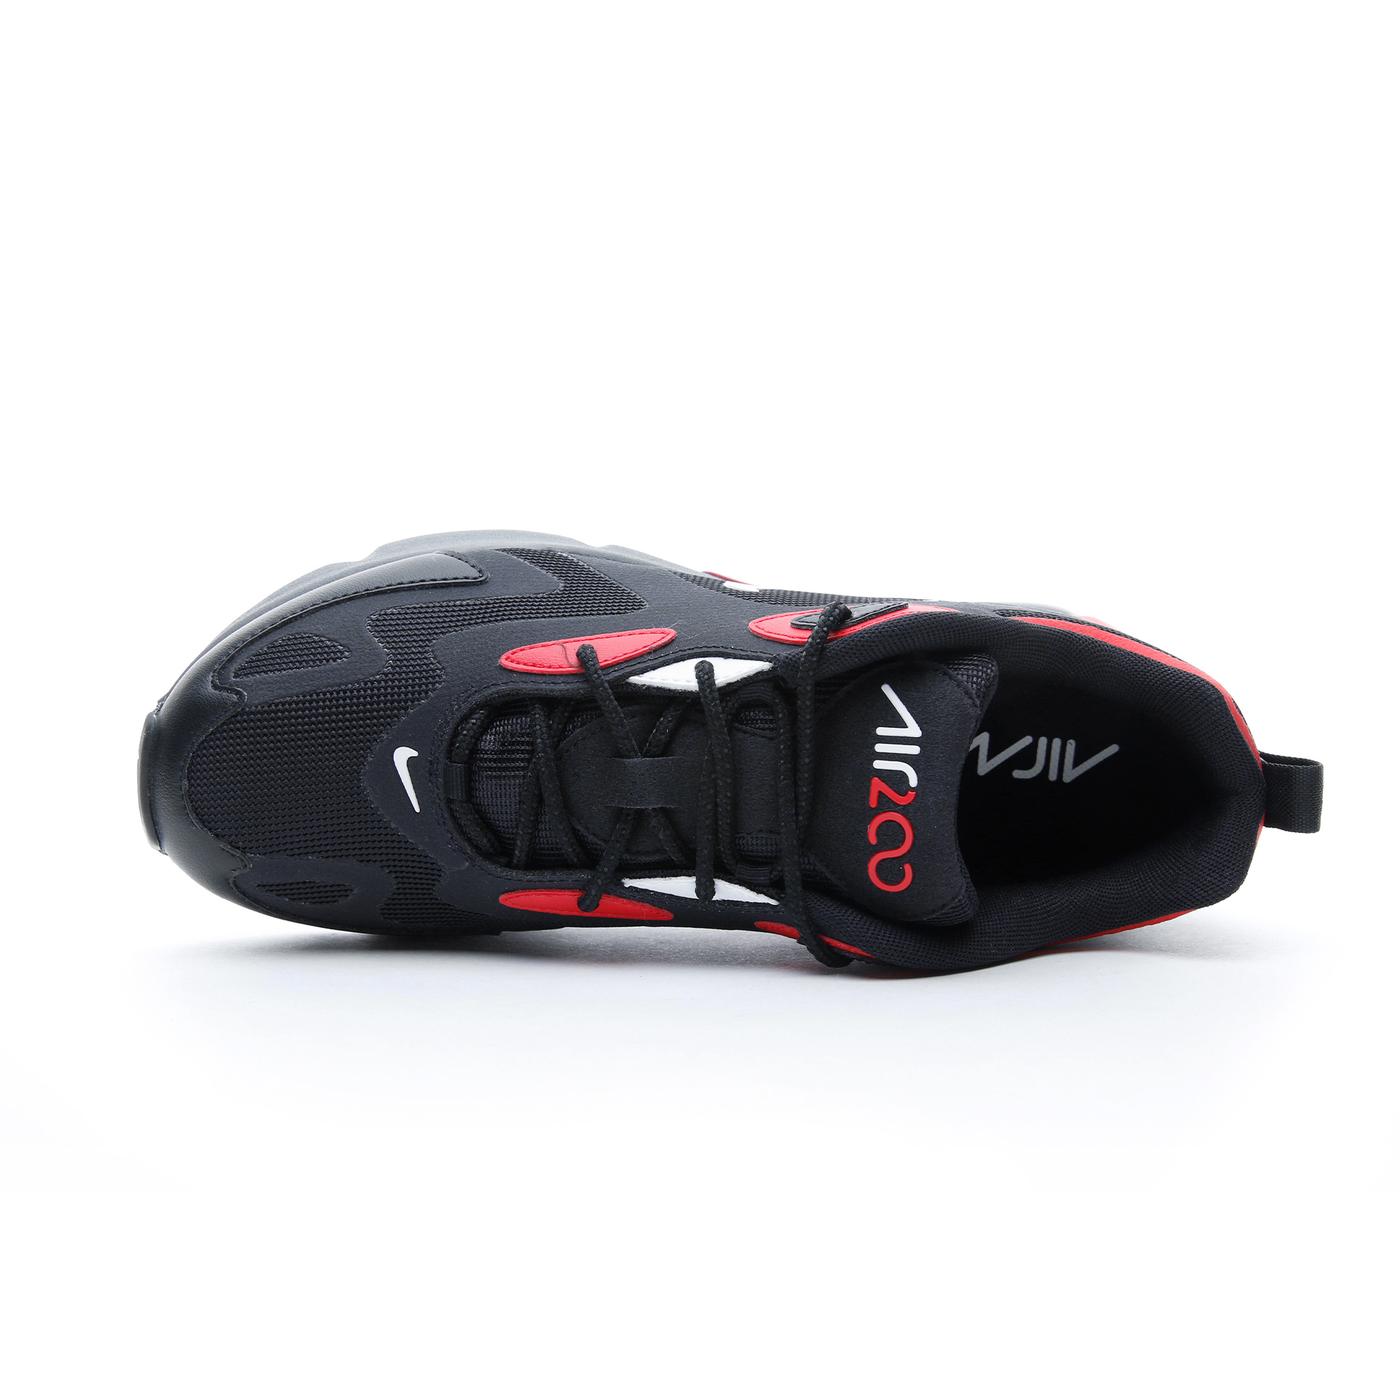 Nike Air Max 200 Erkek Siyah Spor Ayakkabı